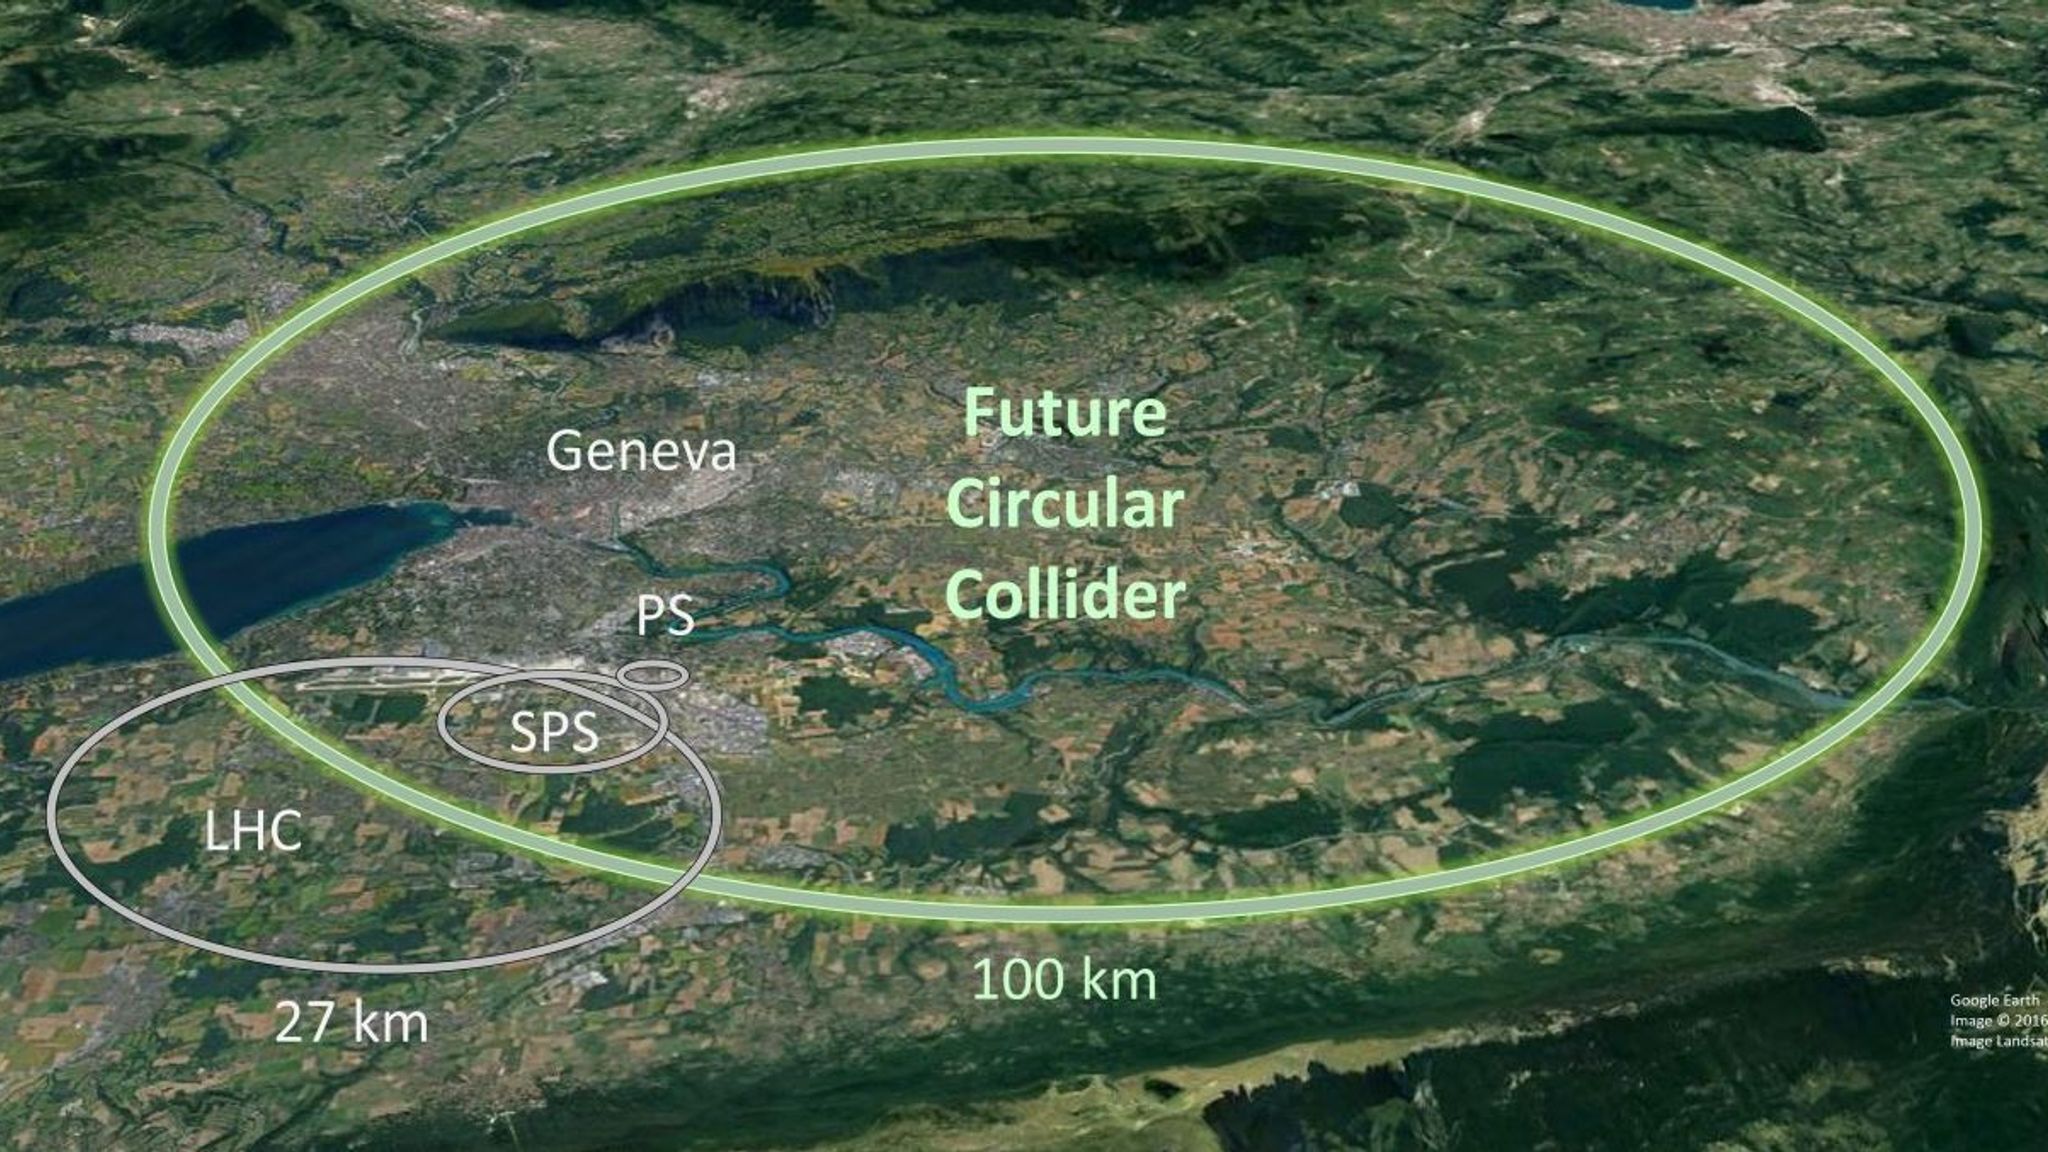 Самая большая частица. Швейцария ЦЕРН коллайдер. Адронный коллайдер 100 км. Новый адронный коллайдер 100 км. Большой адронный коллайдер площадь.